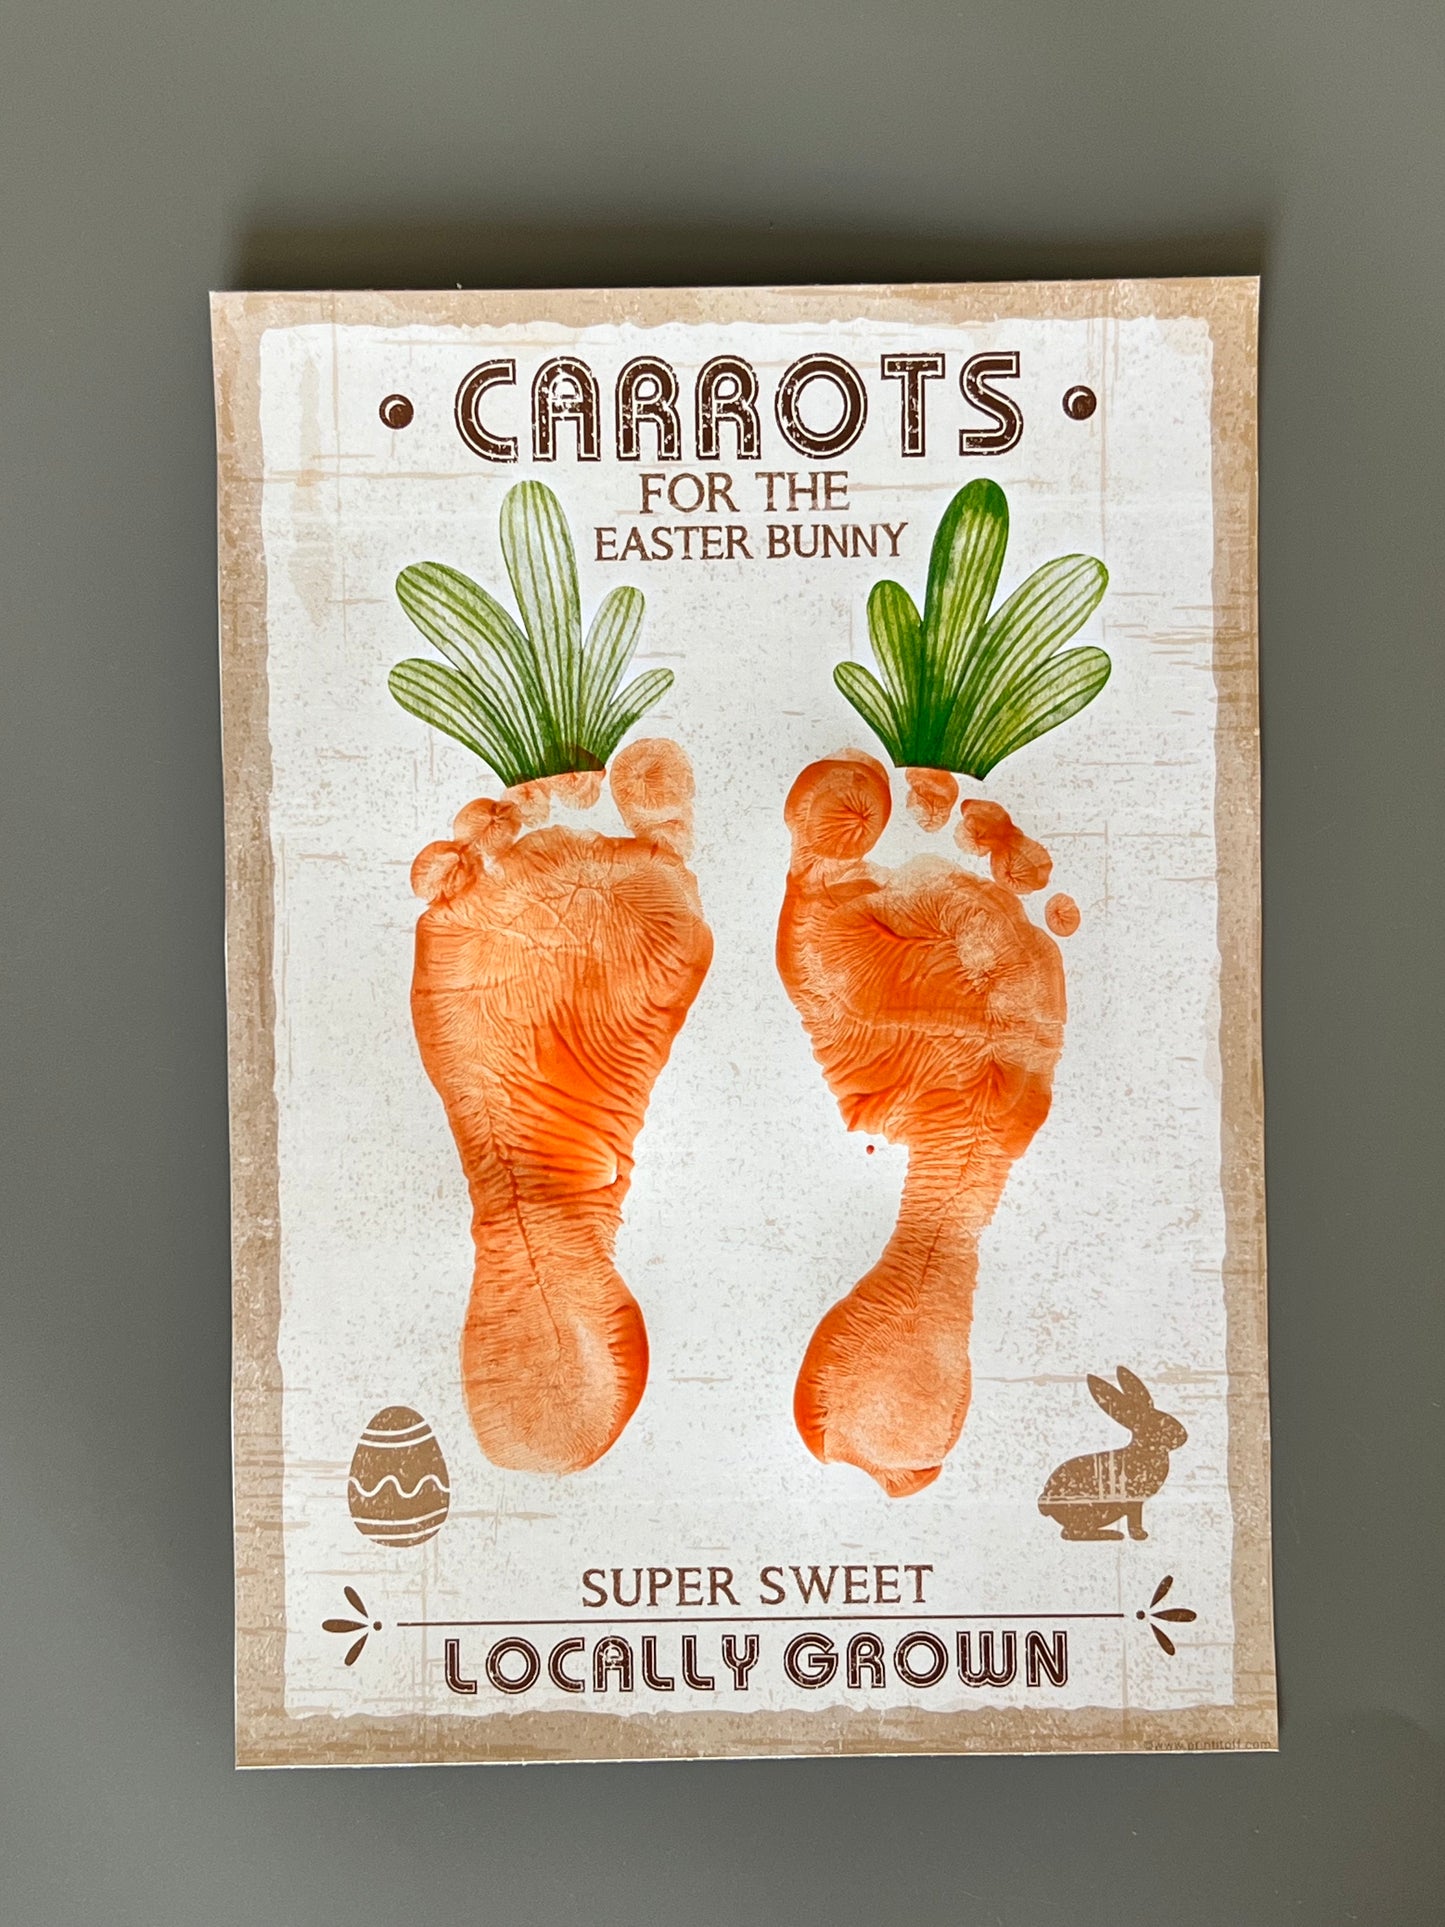 Carrots for Easter Bunny / Footprint Feet Art Craft / Kids Baby Toddler / Activity Keepsake Gift Card Decor Farm Sign / PRINT IT OFF